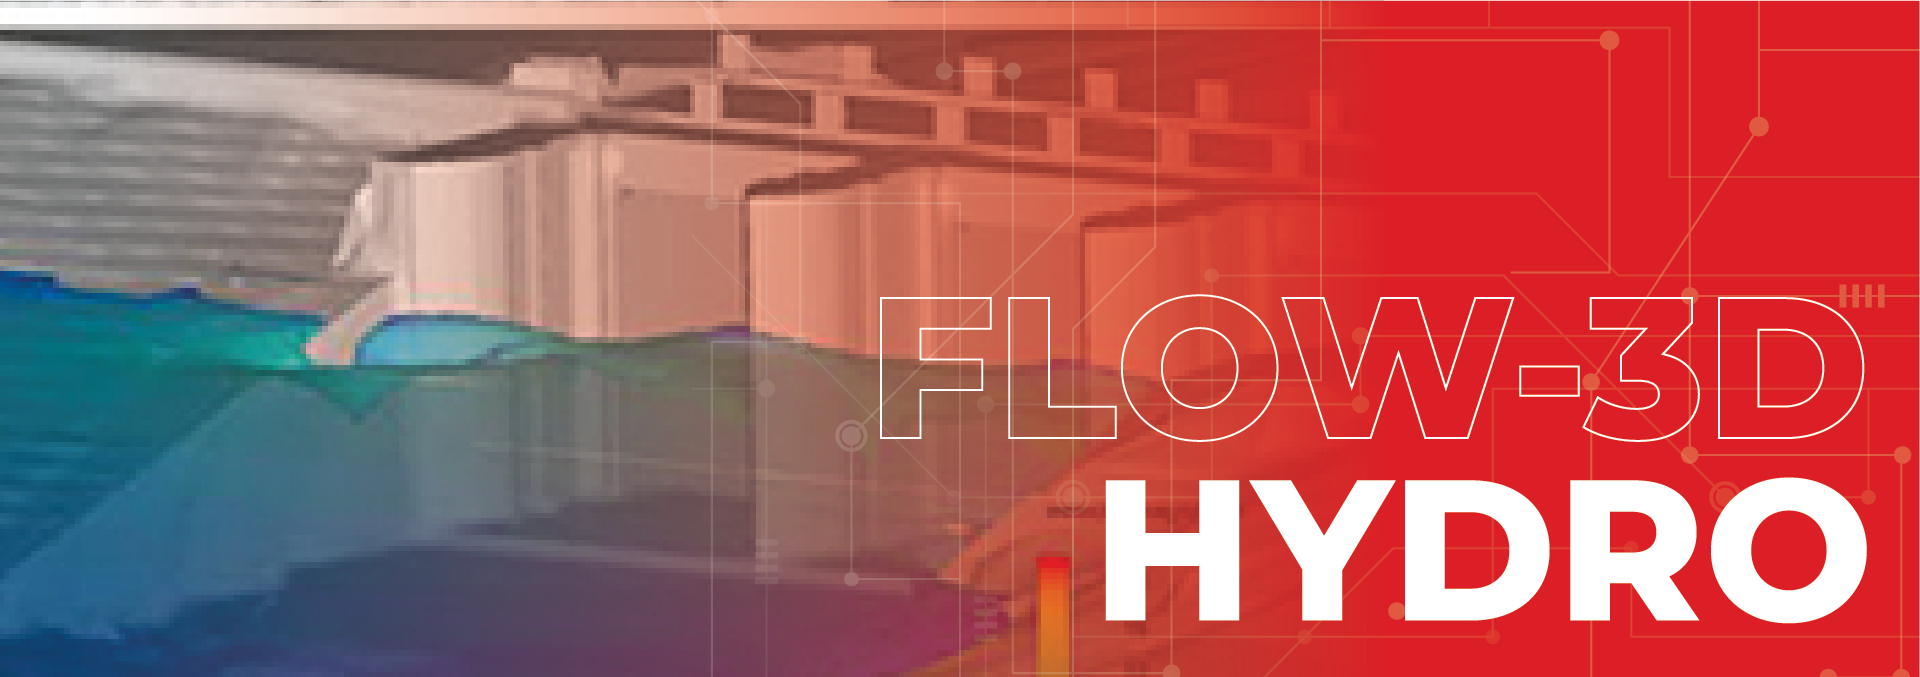 Flow-3D Hydro